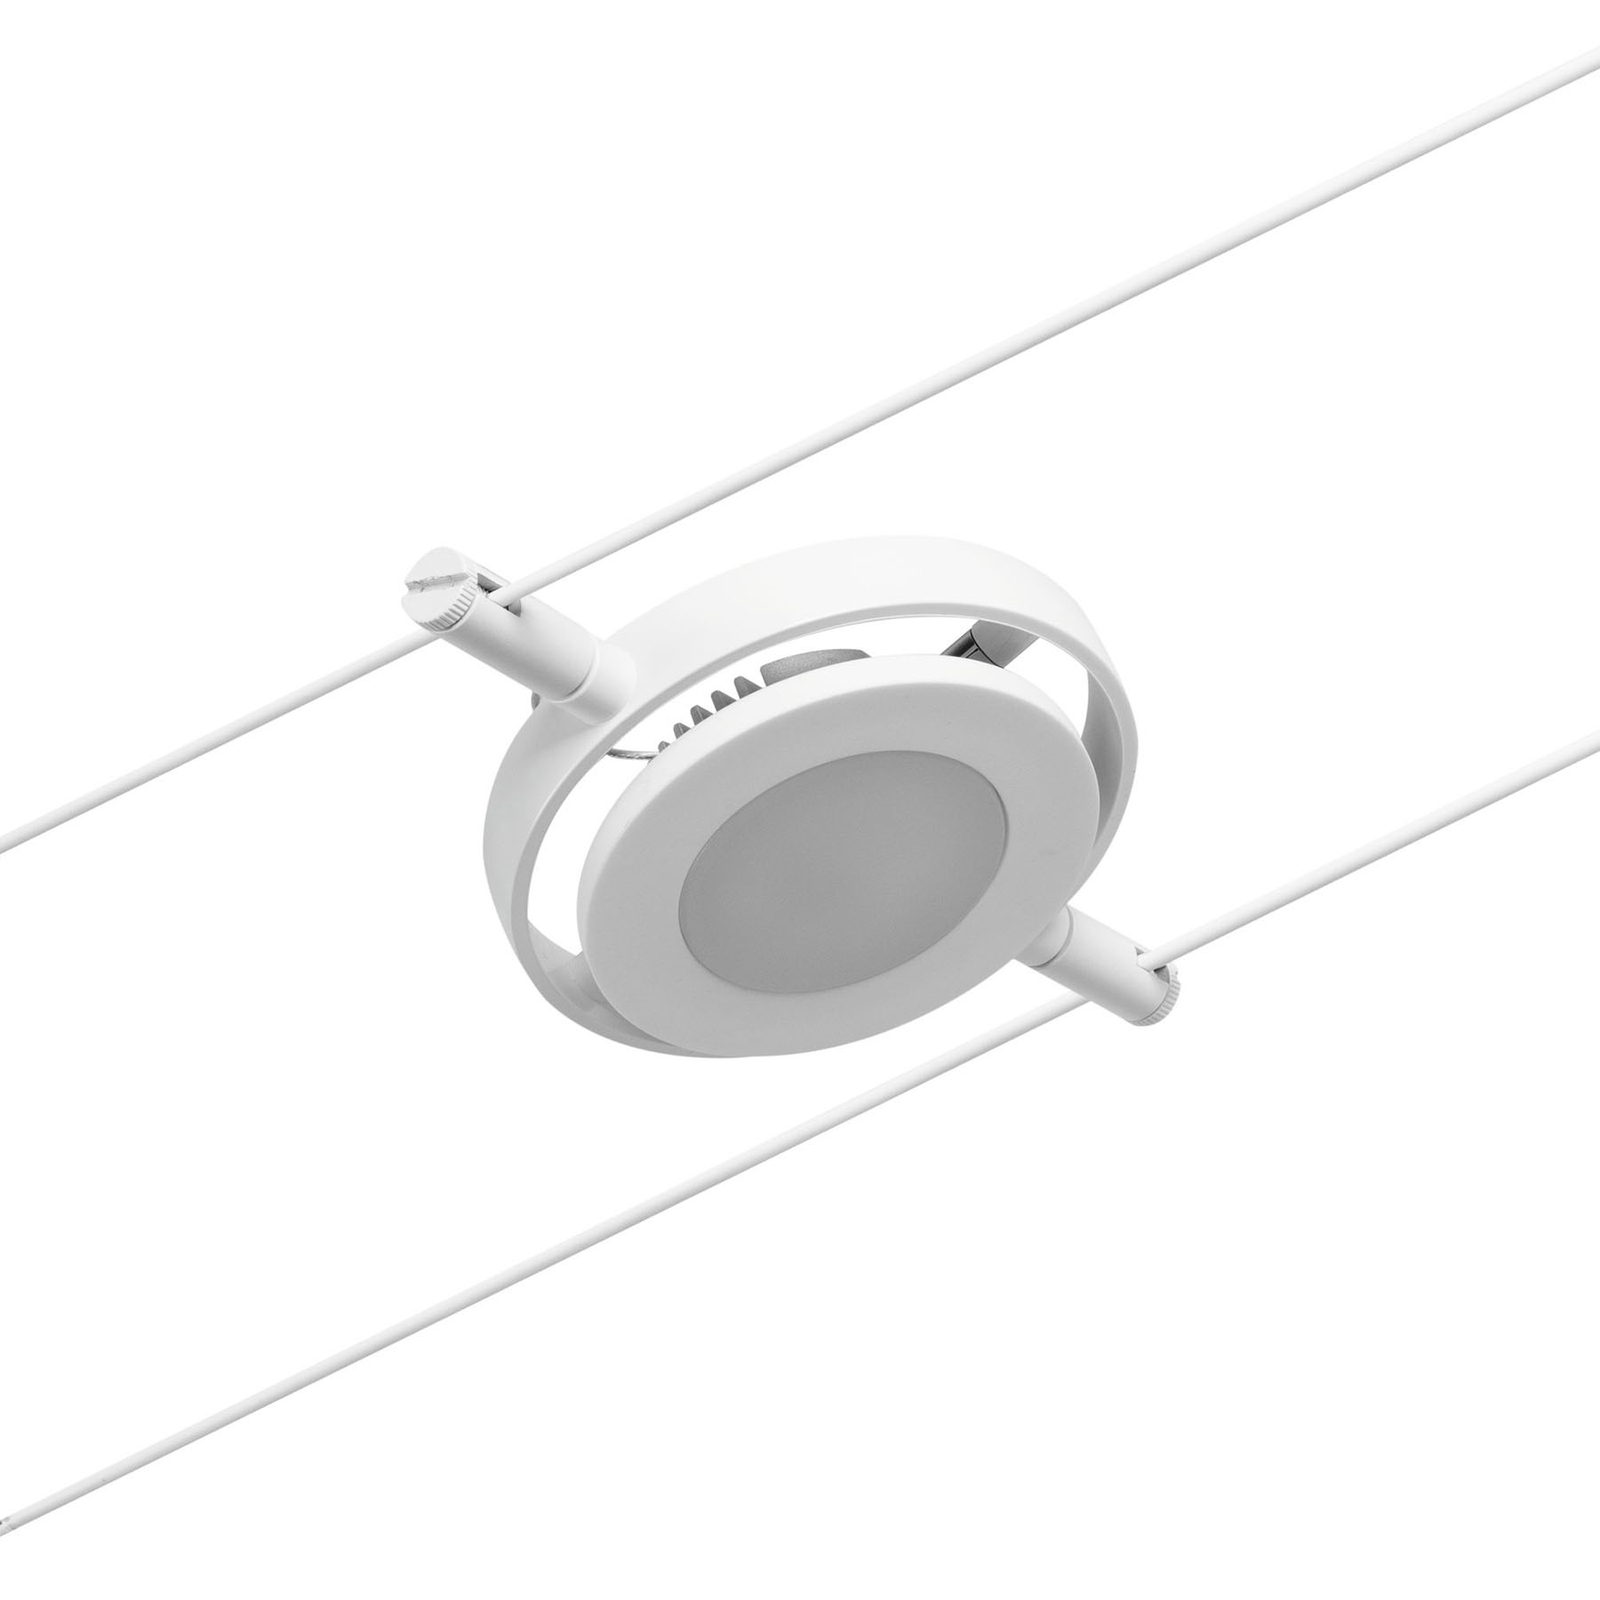 Paulmann Wire RoundMac LED-Seilsystem, 5-fl. weiß